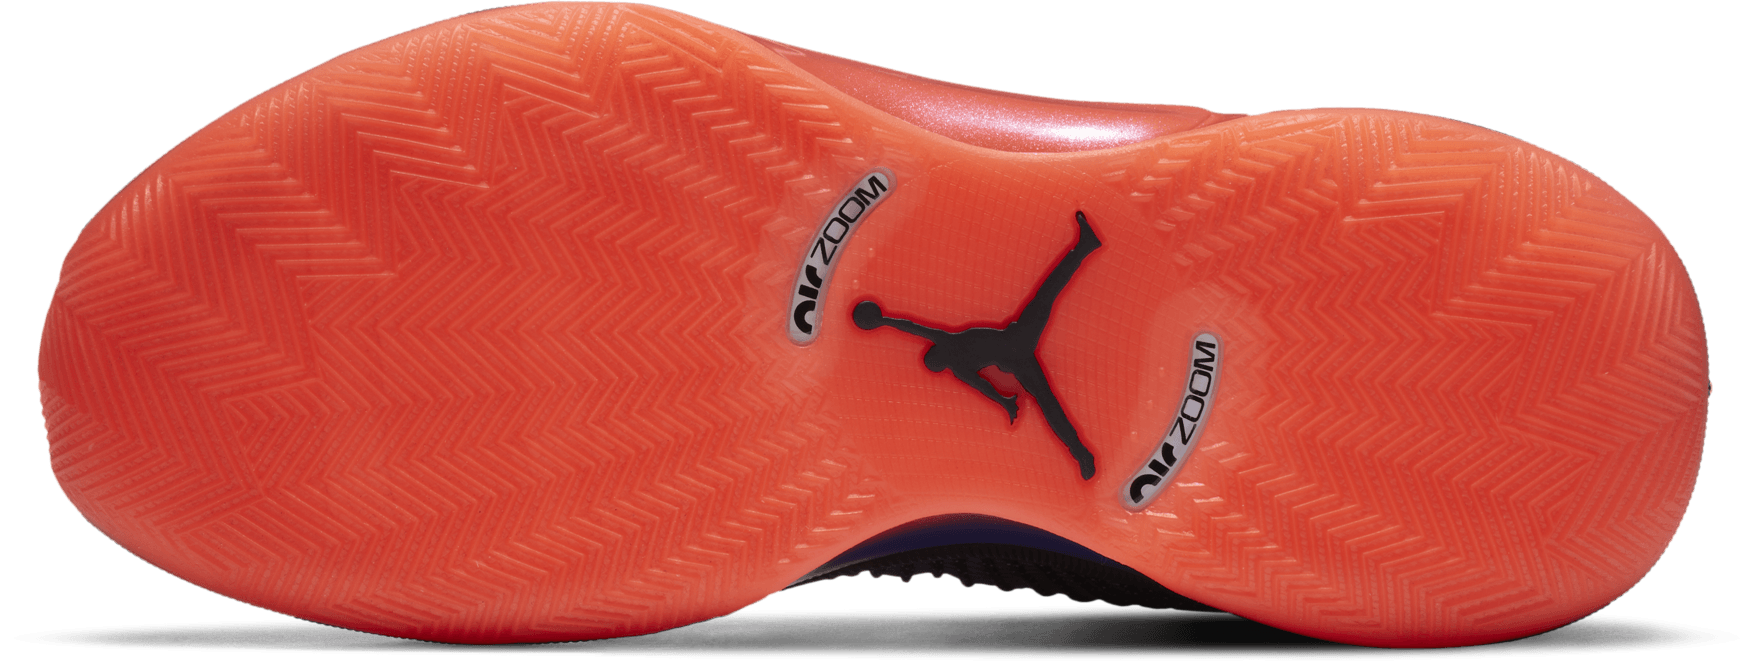 Air Jordan 35 - Review, Deals, Pics of 7 Colorways